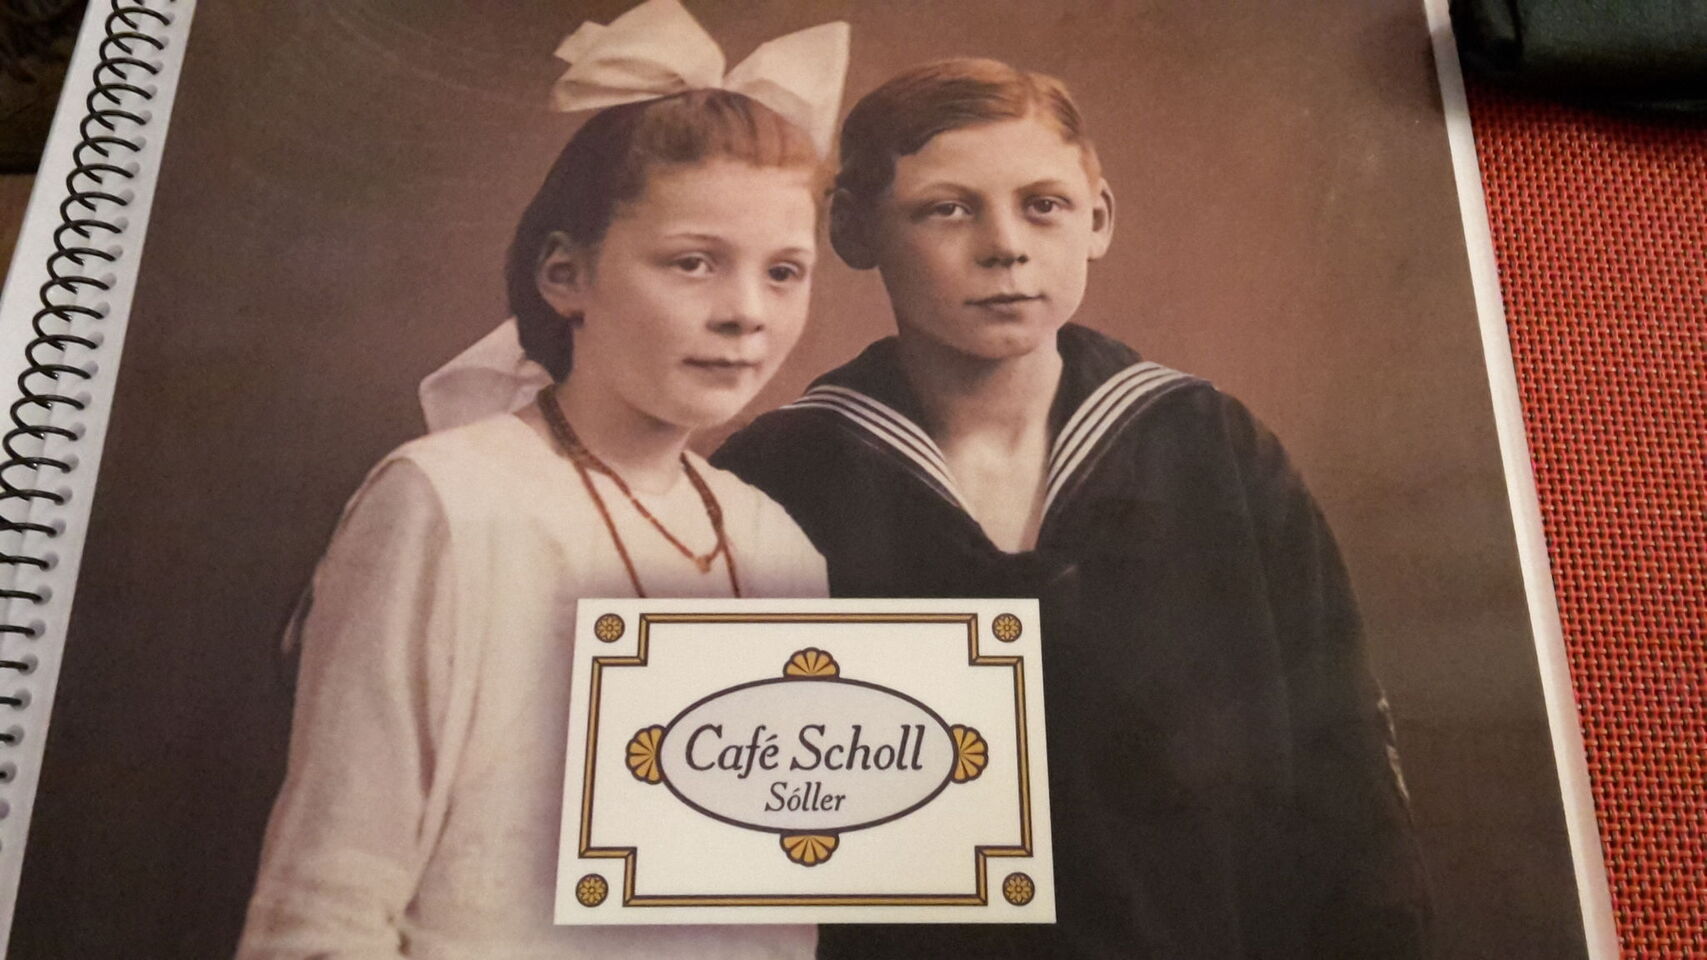 A photo of Café Scholl